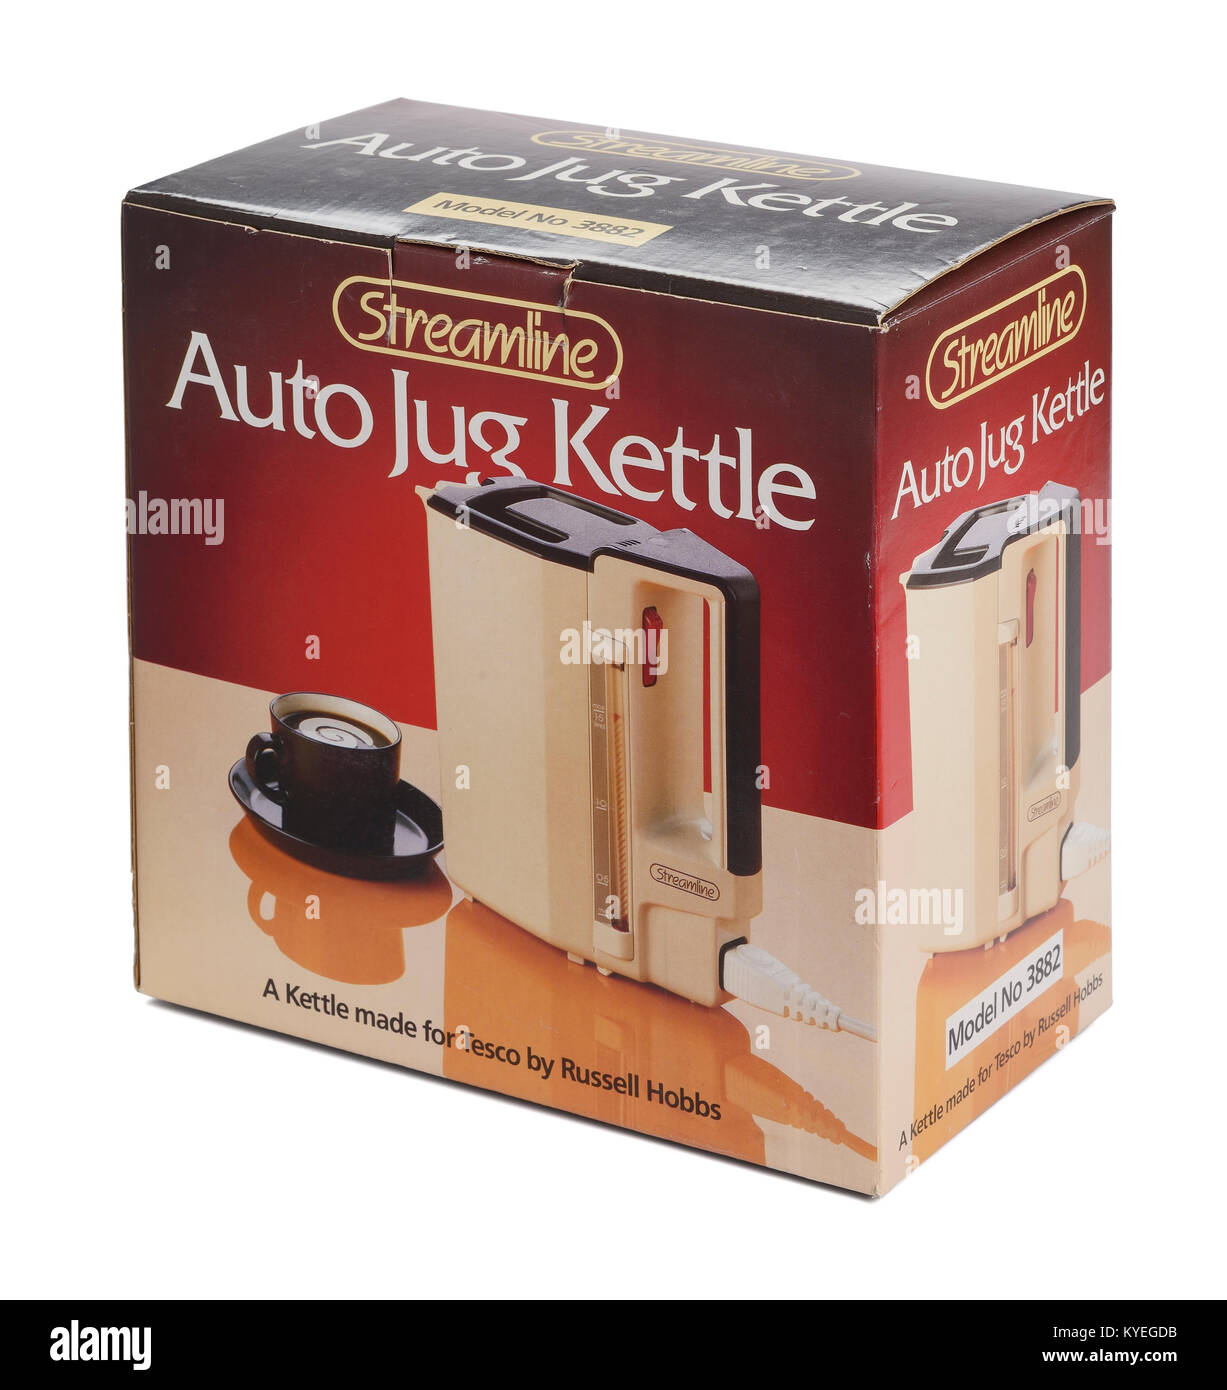 https://c8.alamy.com/comp/KYEGDB/old-vintage-retro-box-for-an-electric-kettle-KYEGDB.jpg